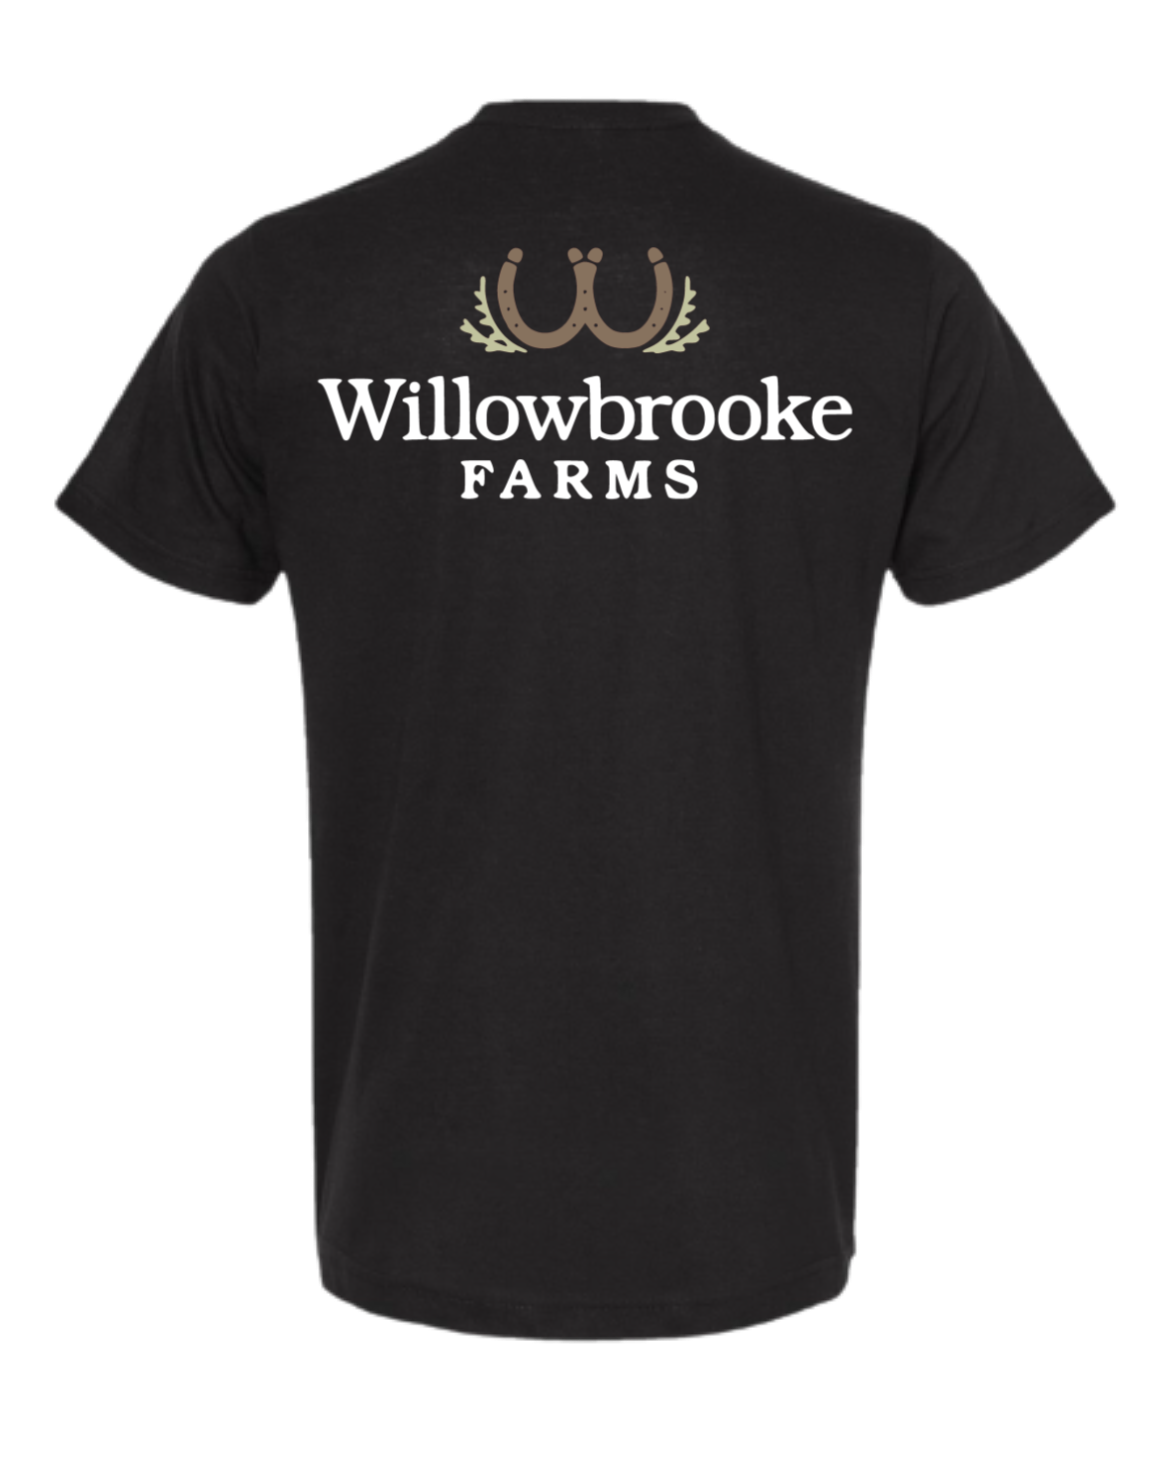 Willowbrooke Farms T-shirt